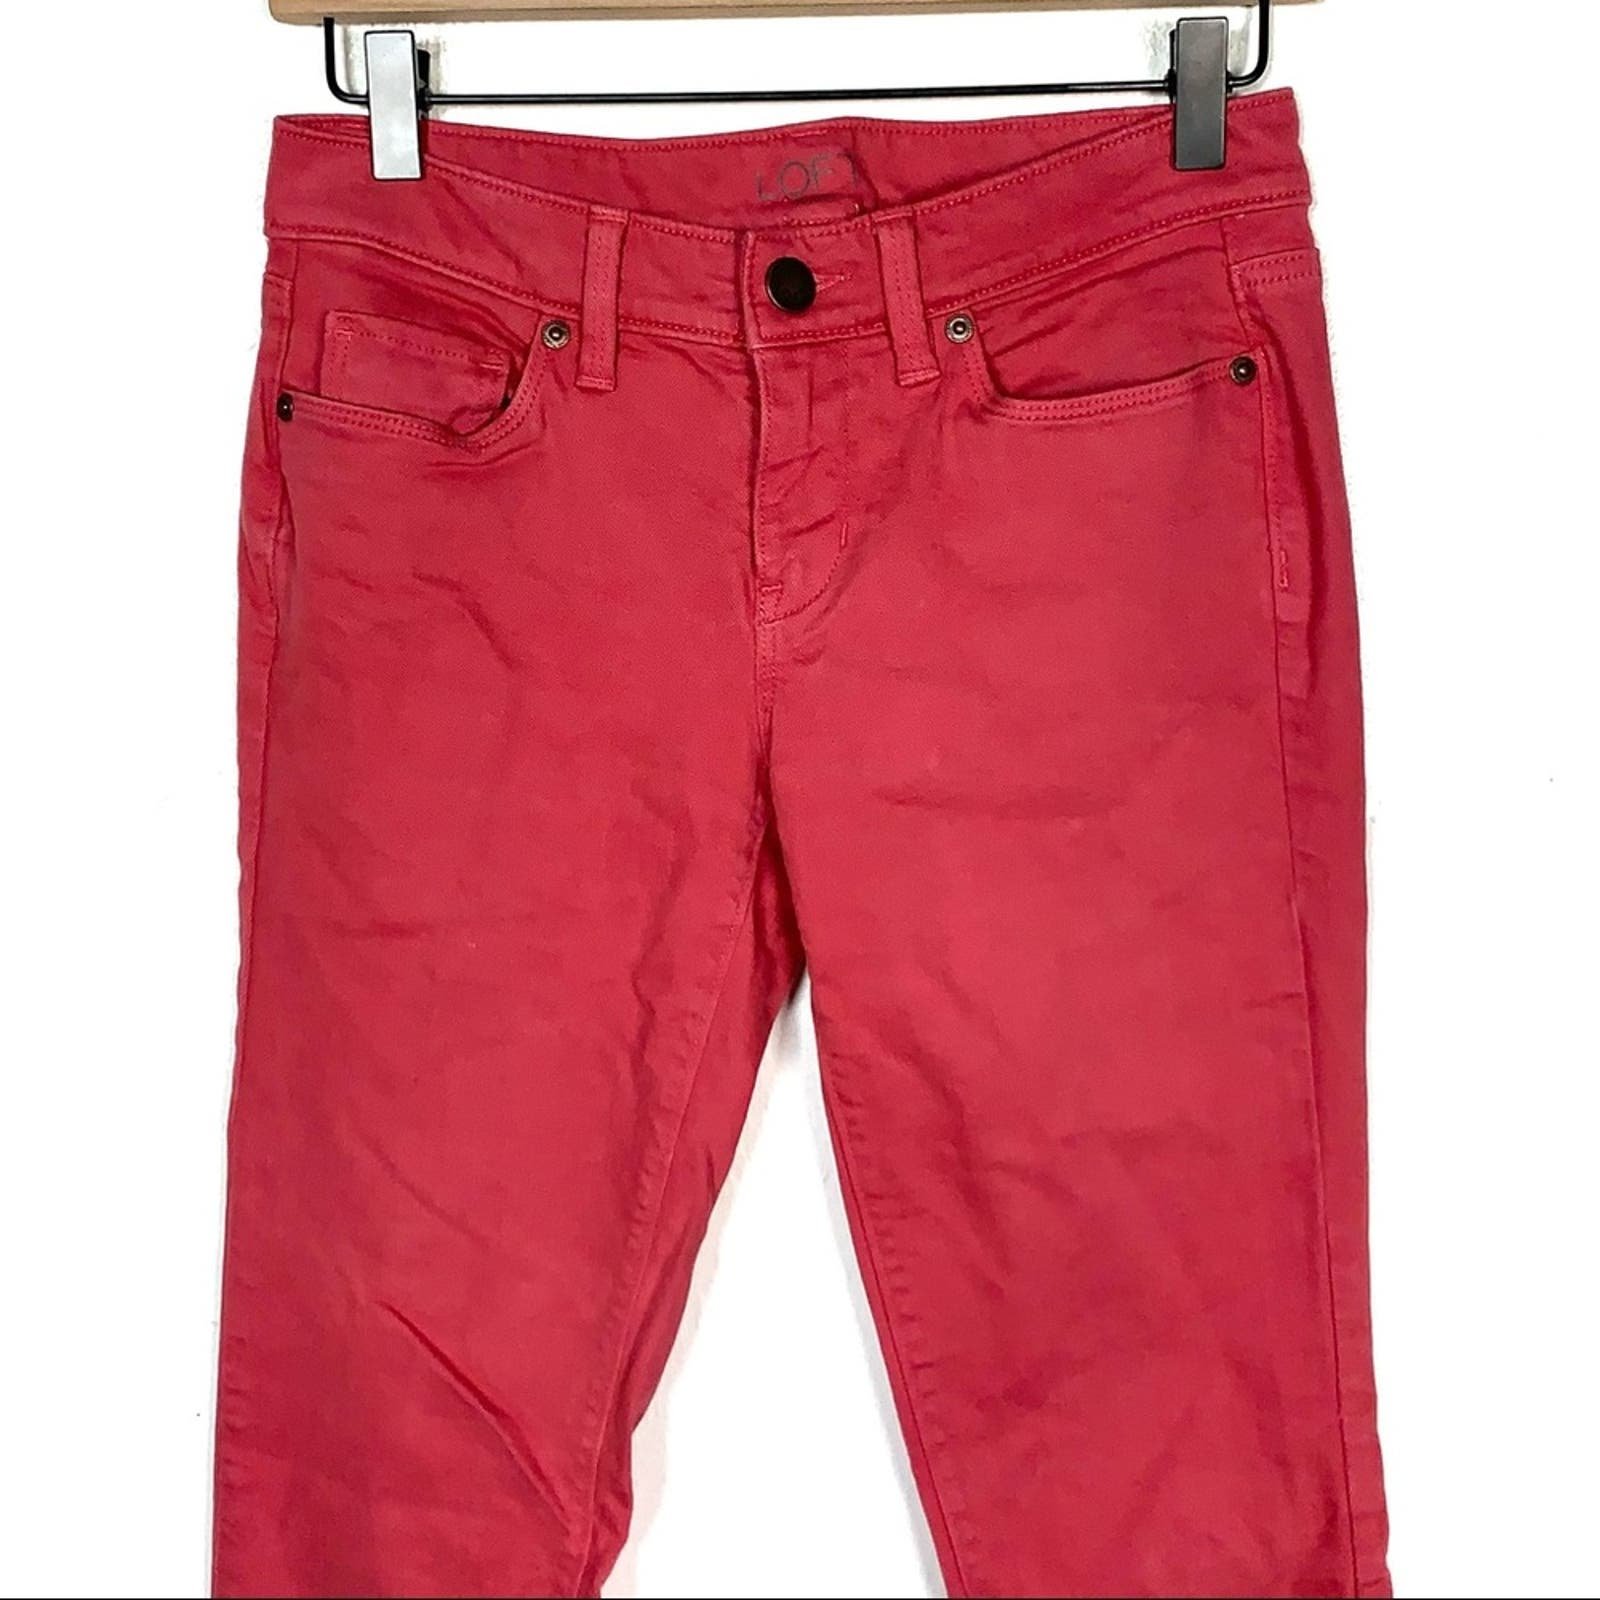 Popular Loft pink modern skinny low rise jeans OiyetxNYG Cool